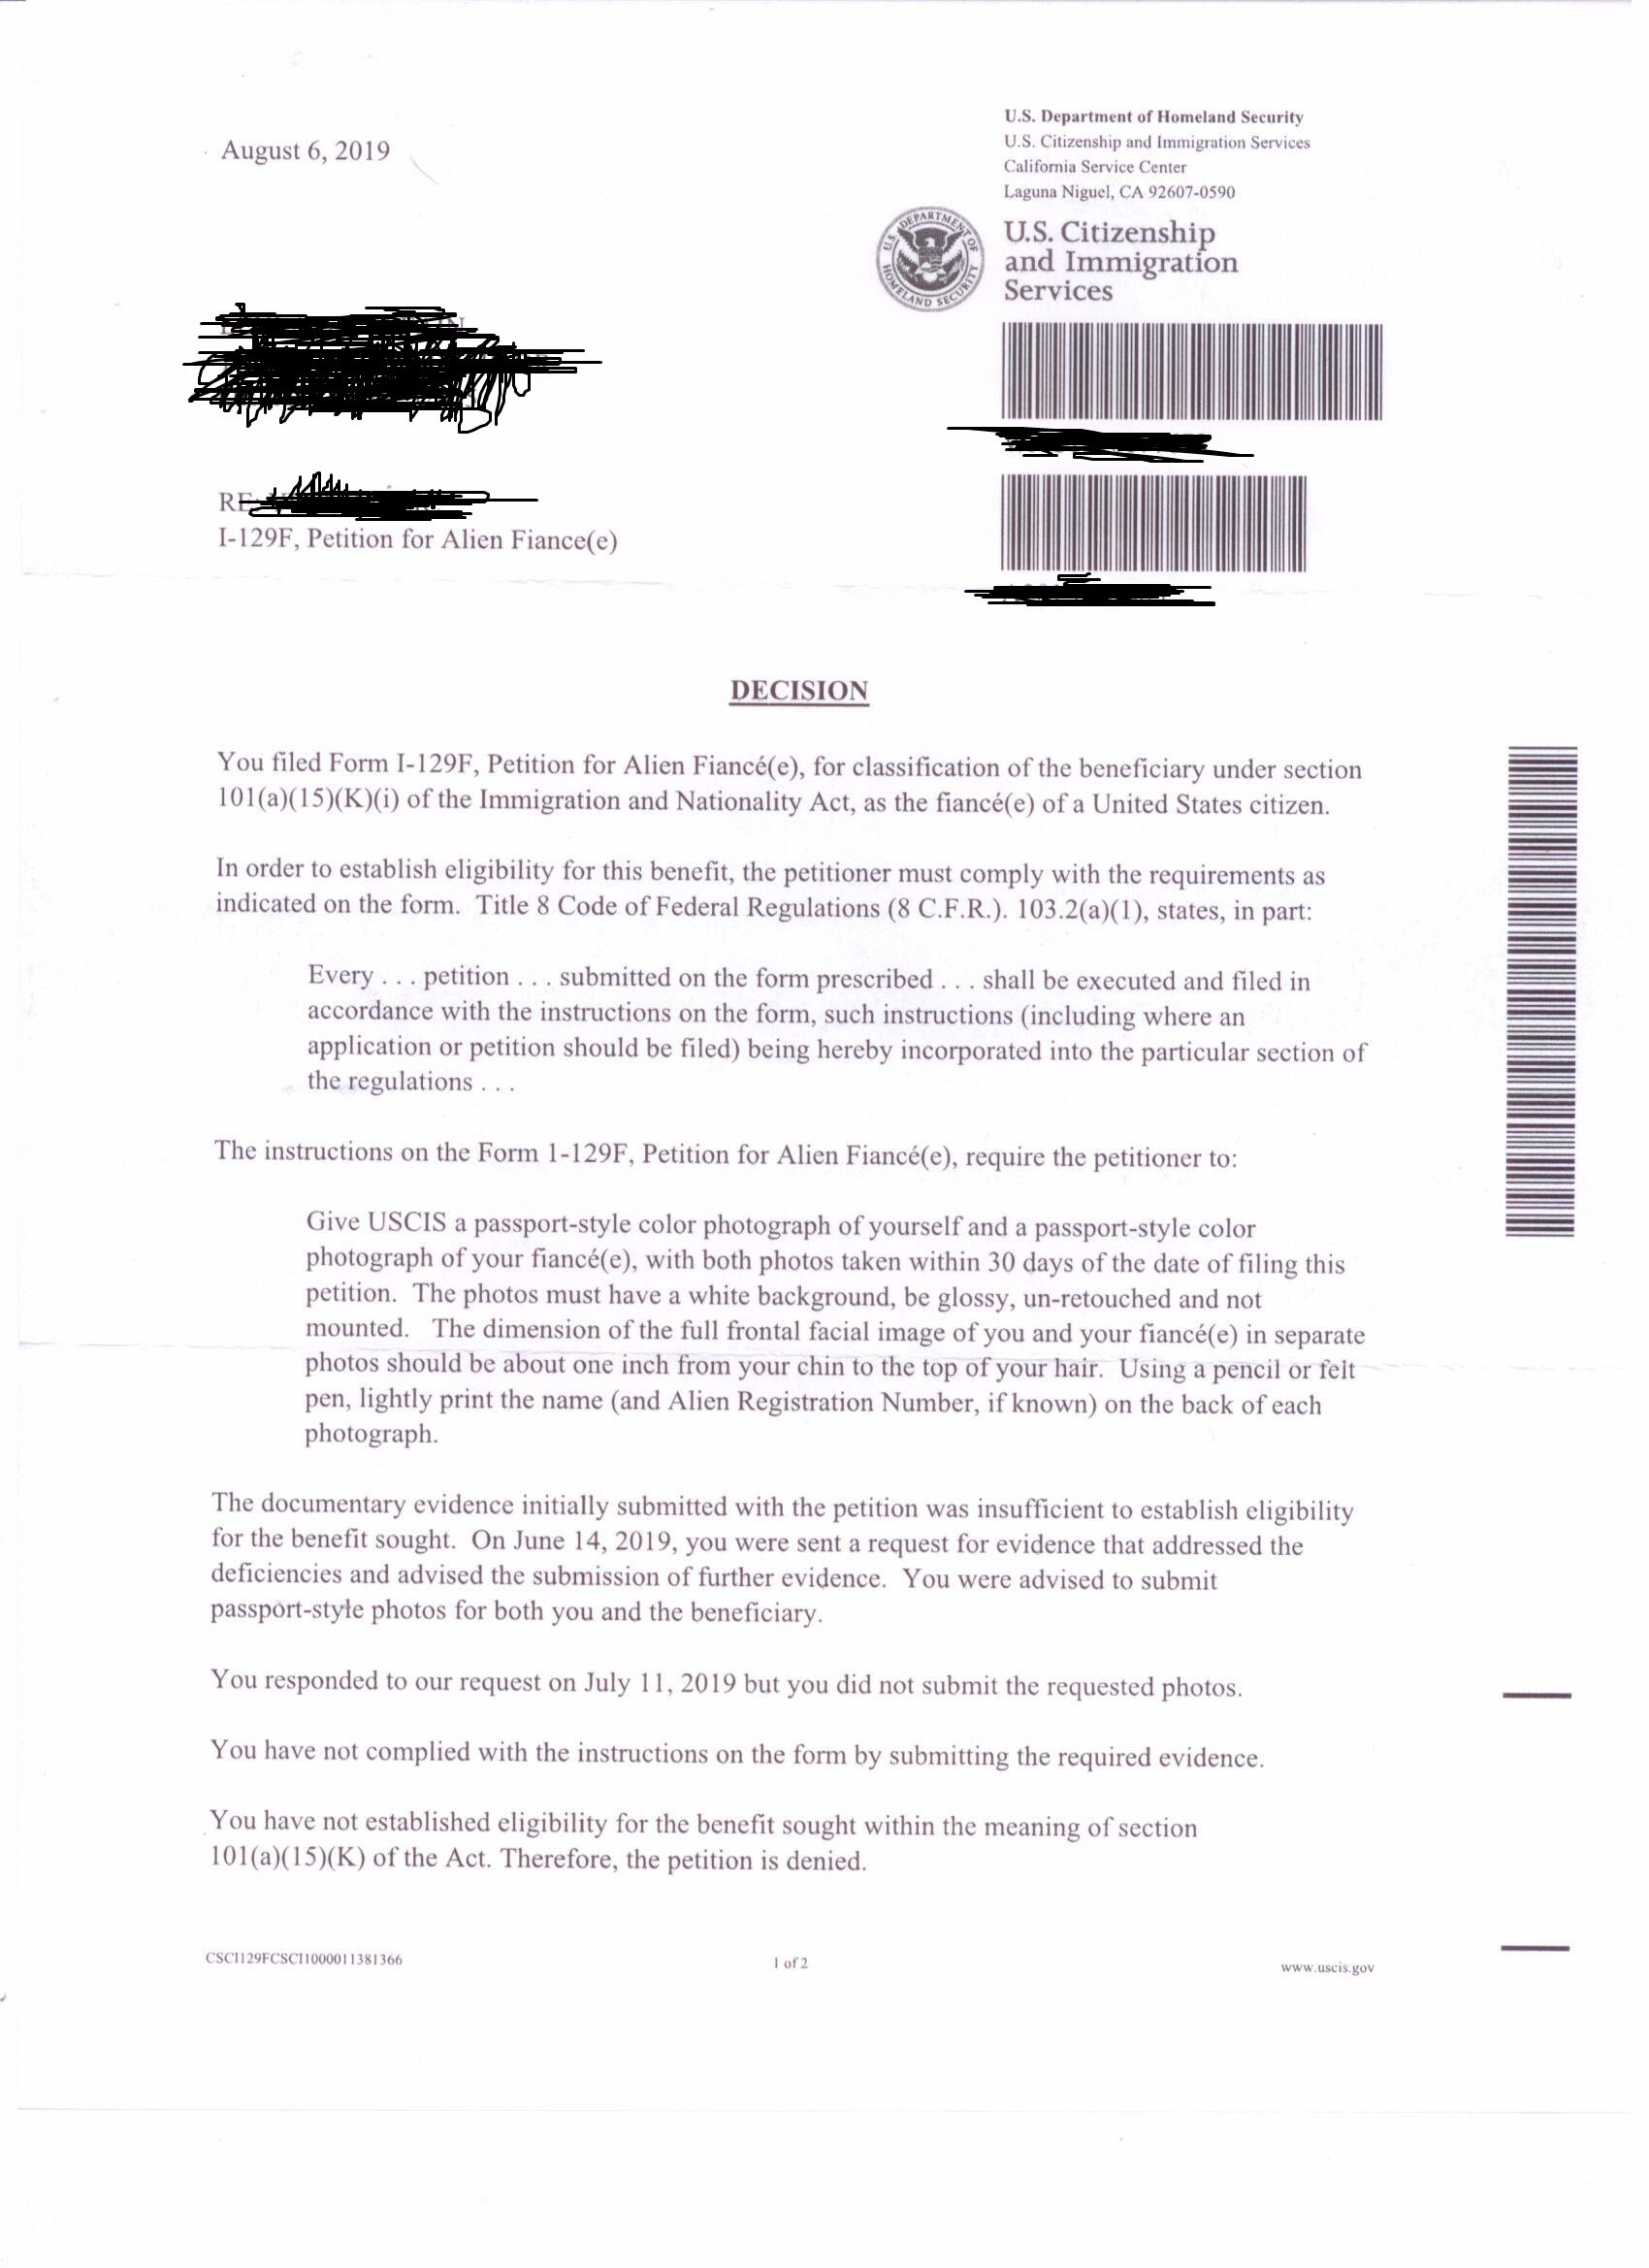 i129f Packet Assembly by Binder OK? - Page 2 - K-1 Fiance(e) Visa Process &  Procedures - VisaJourney